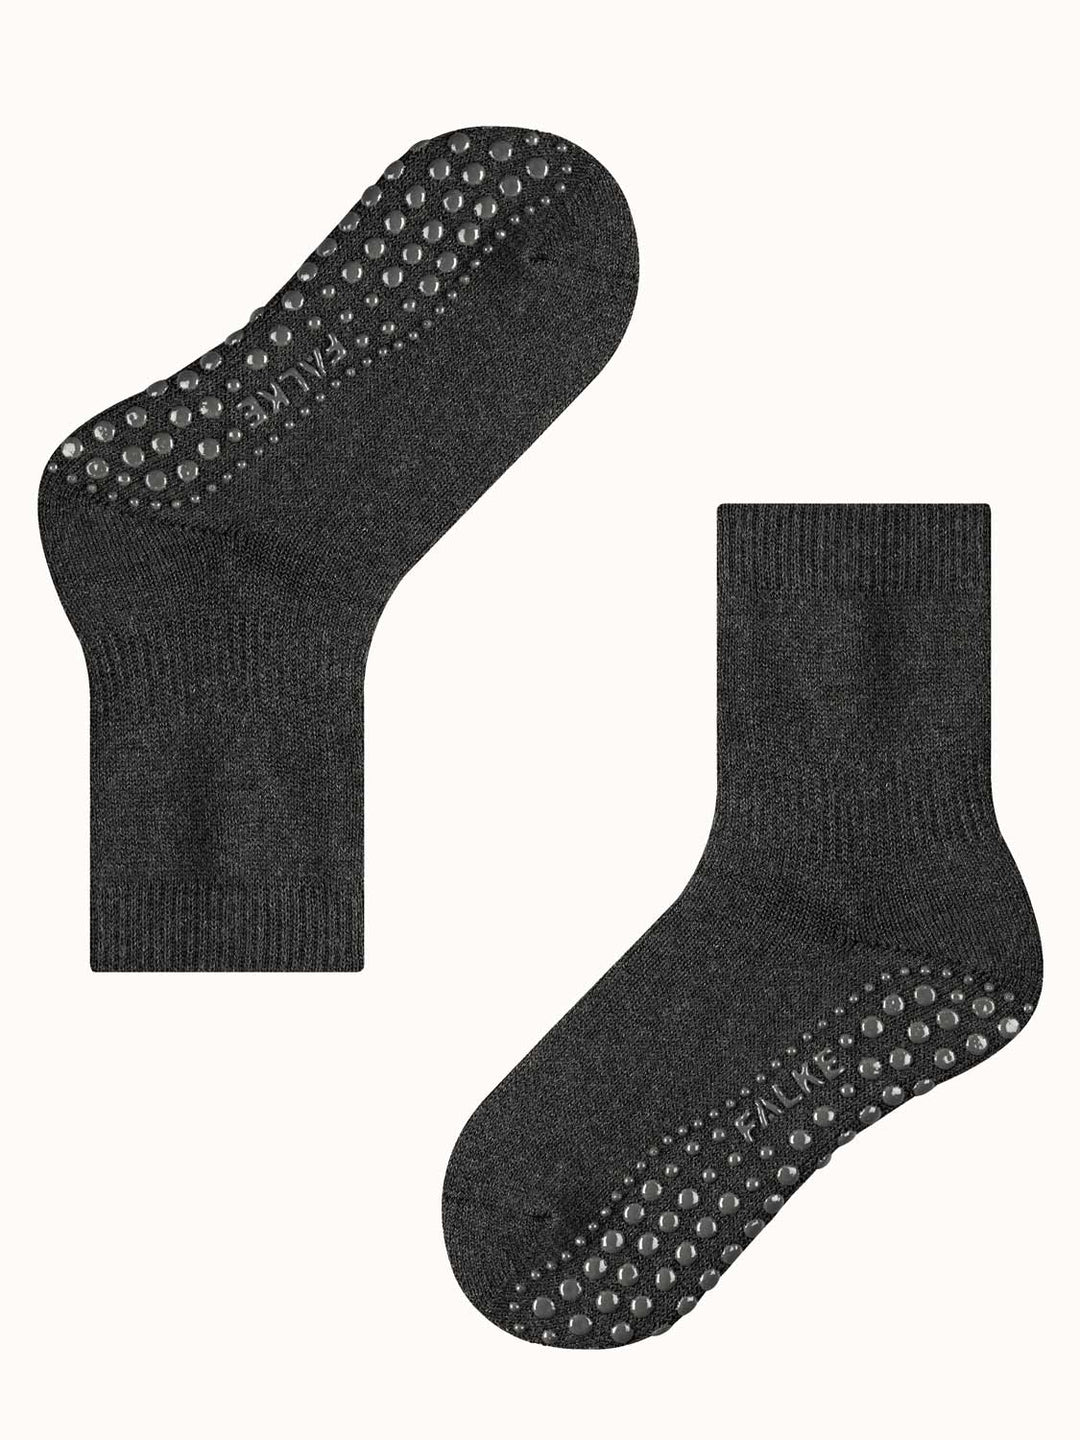 Catspads Kids Merino Slipper Socks, Products, Superlove